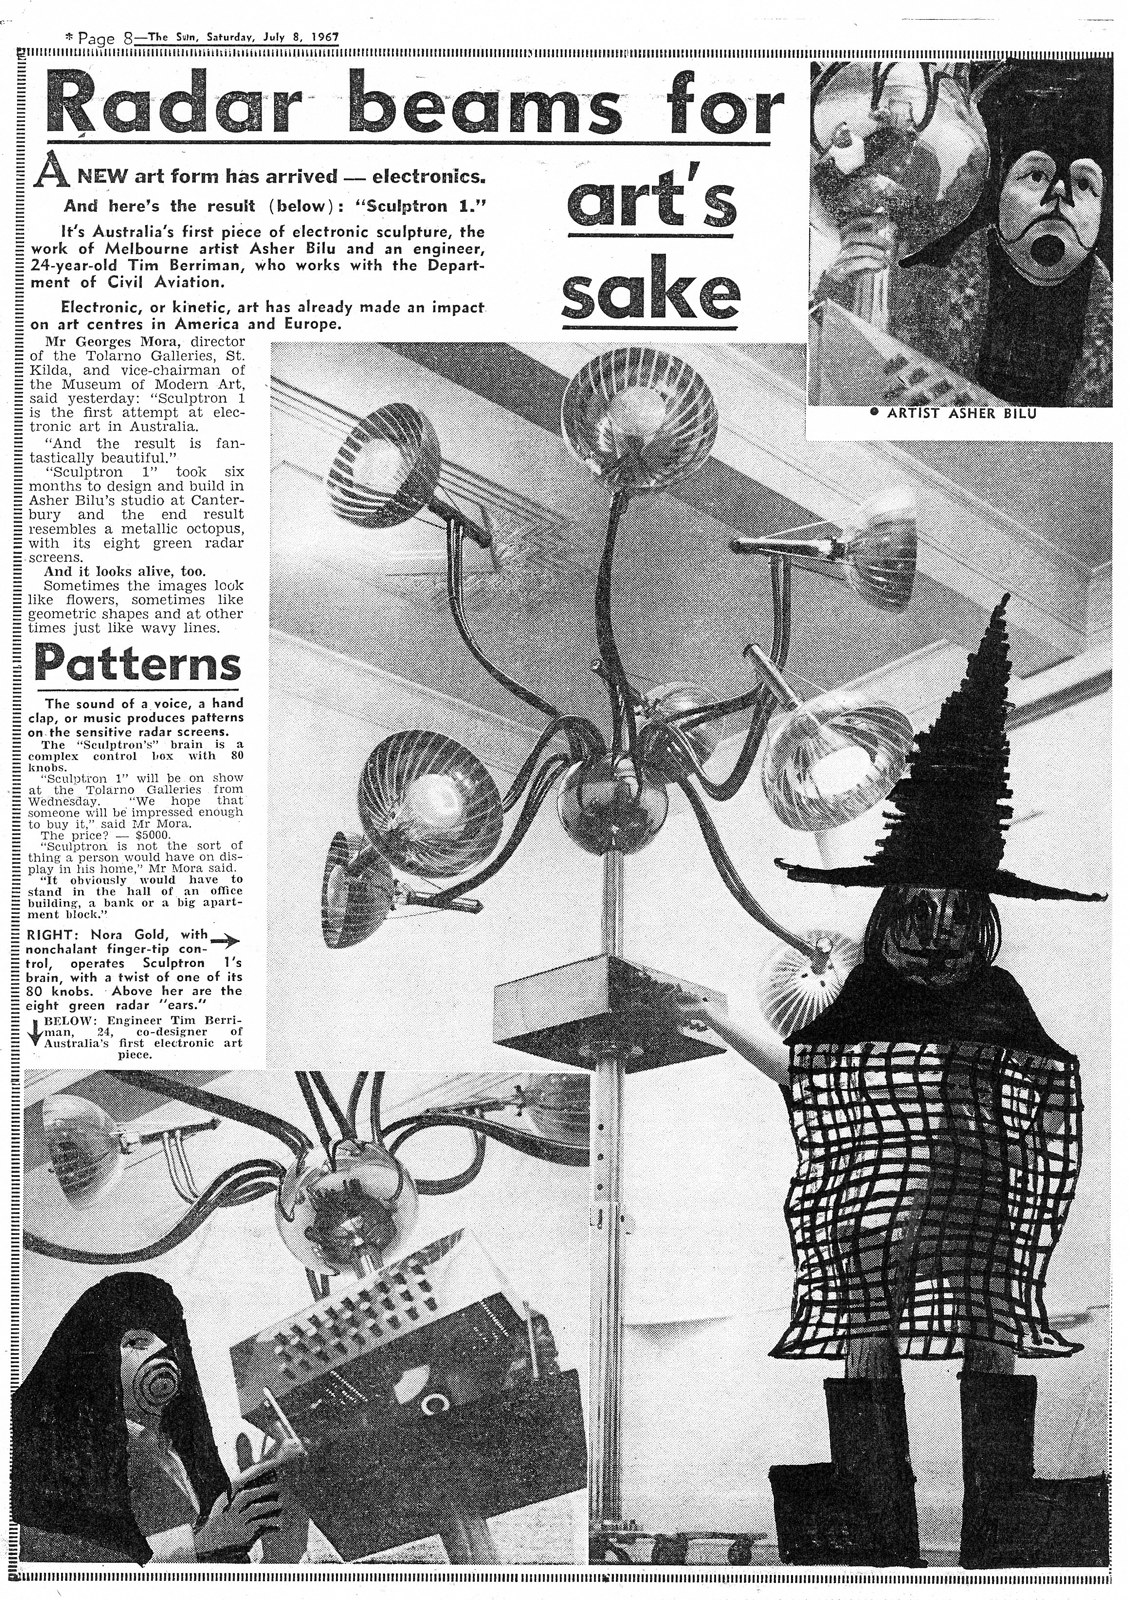 Sculptron (1967) Newspaper article handpainted by artist